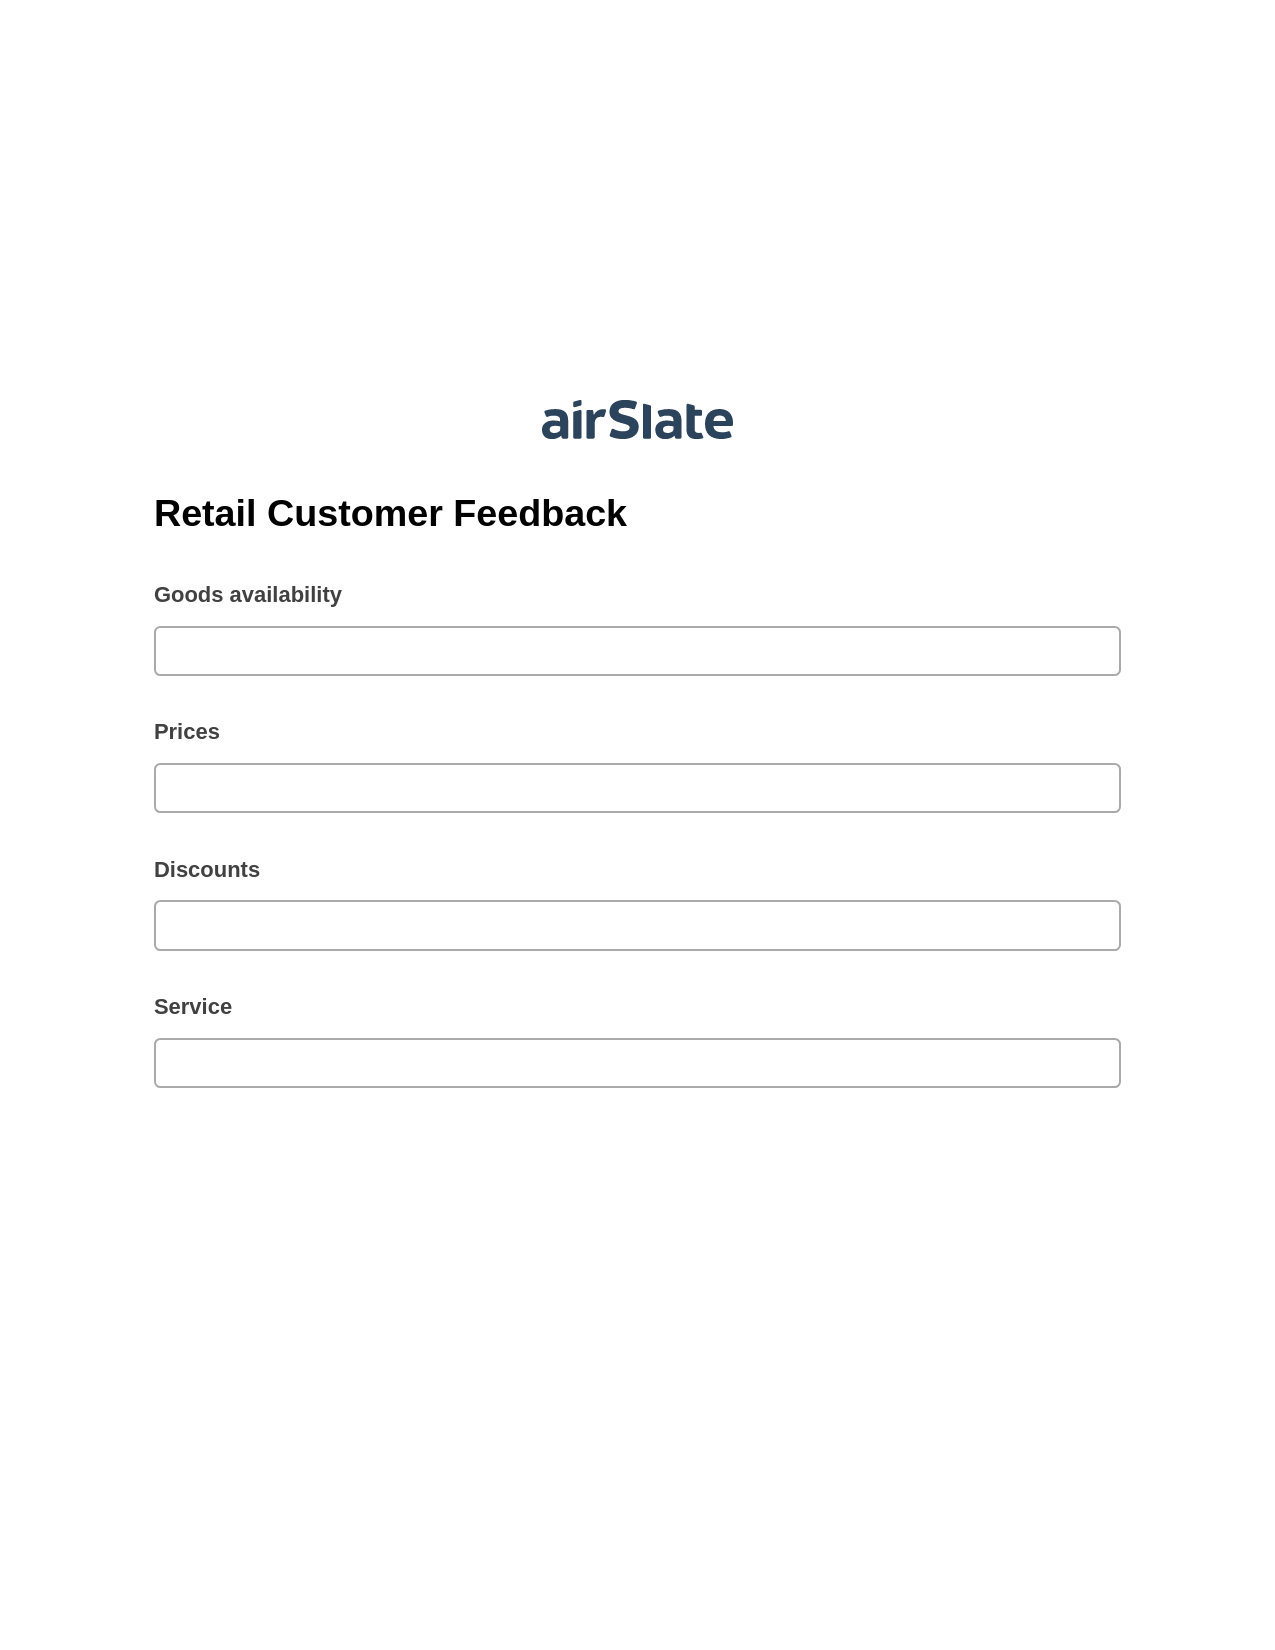 Retail Customer Feedback Pre-fill Slate from MS Dynamics 365 Records Bot, Invoke Salesforce Process Bot, Dropbox Bot